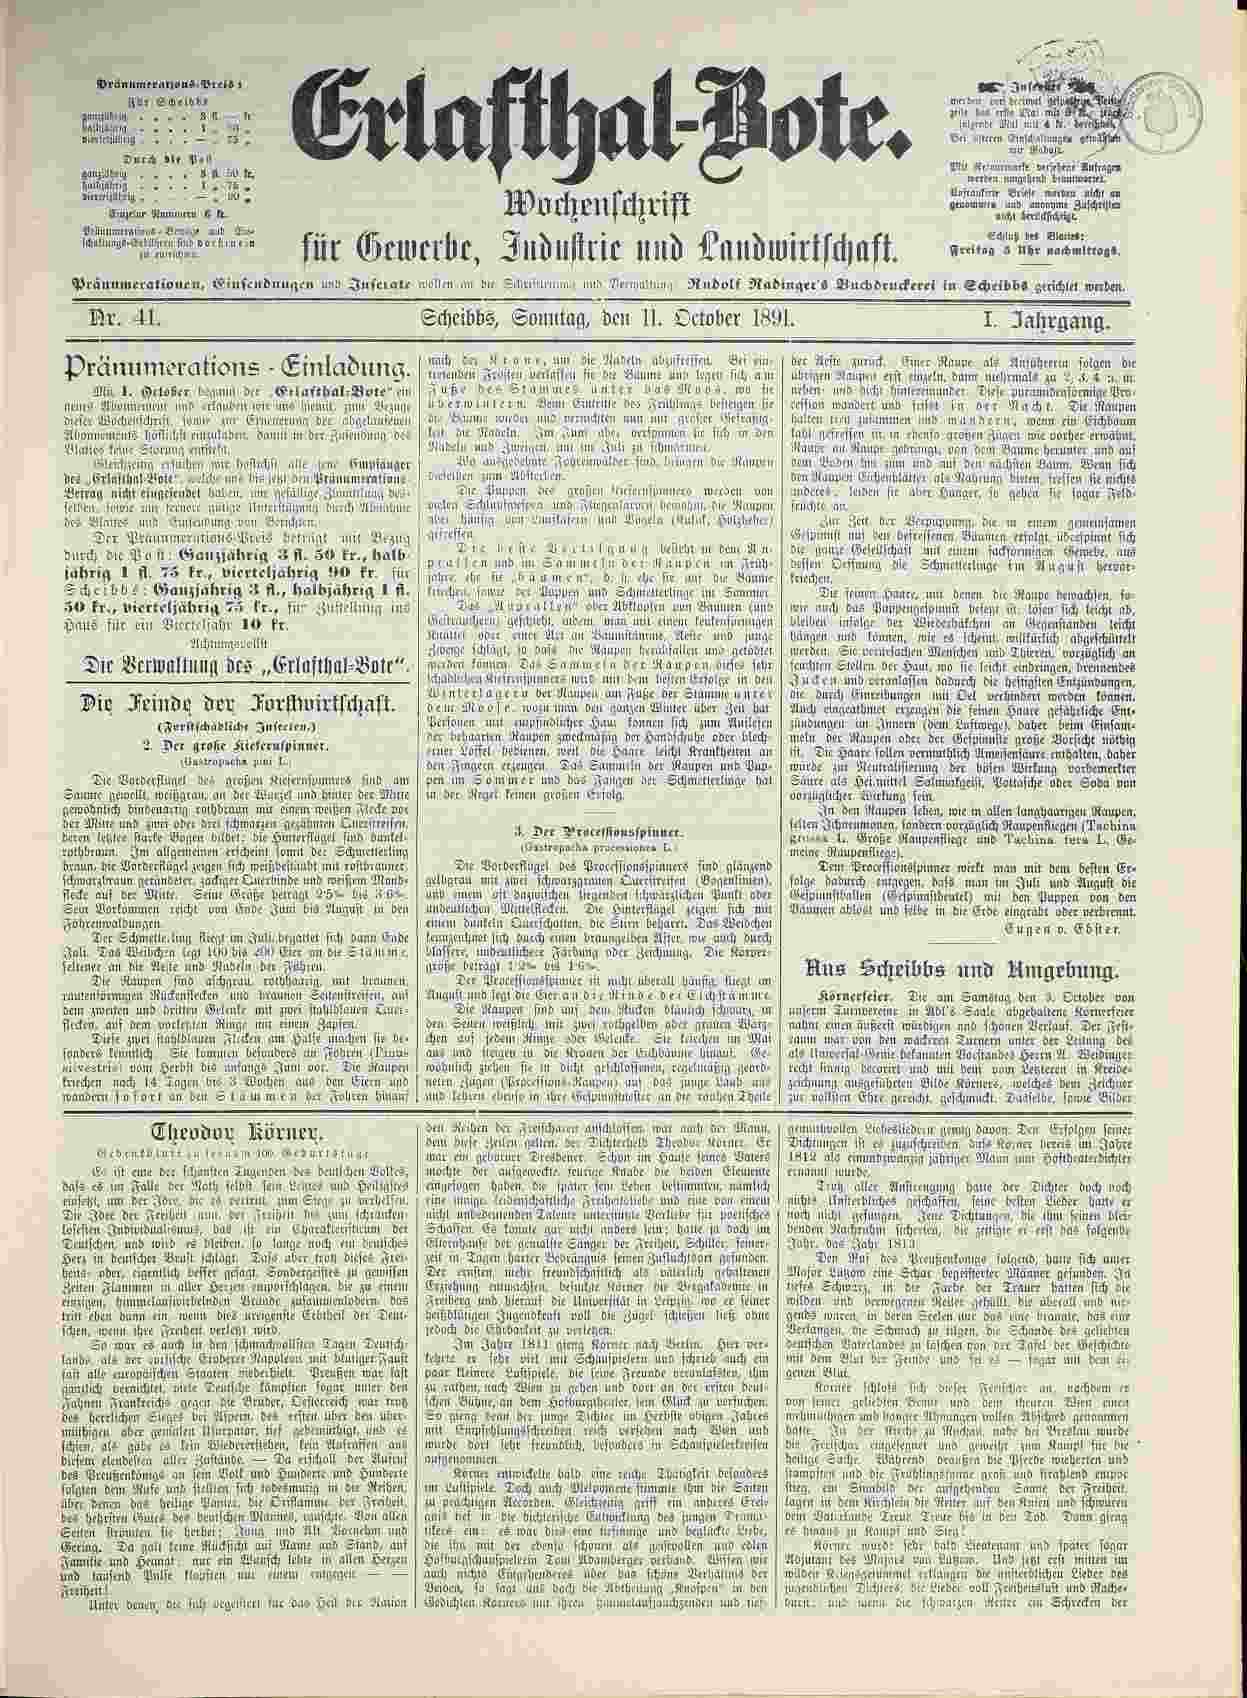 Erlafthal-Bote, 11.10.1891, Seite 1, ANNO/ÖNB